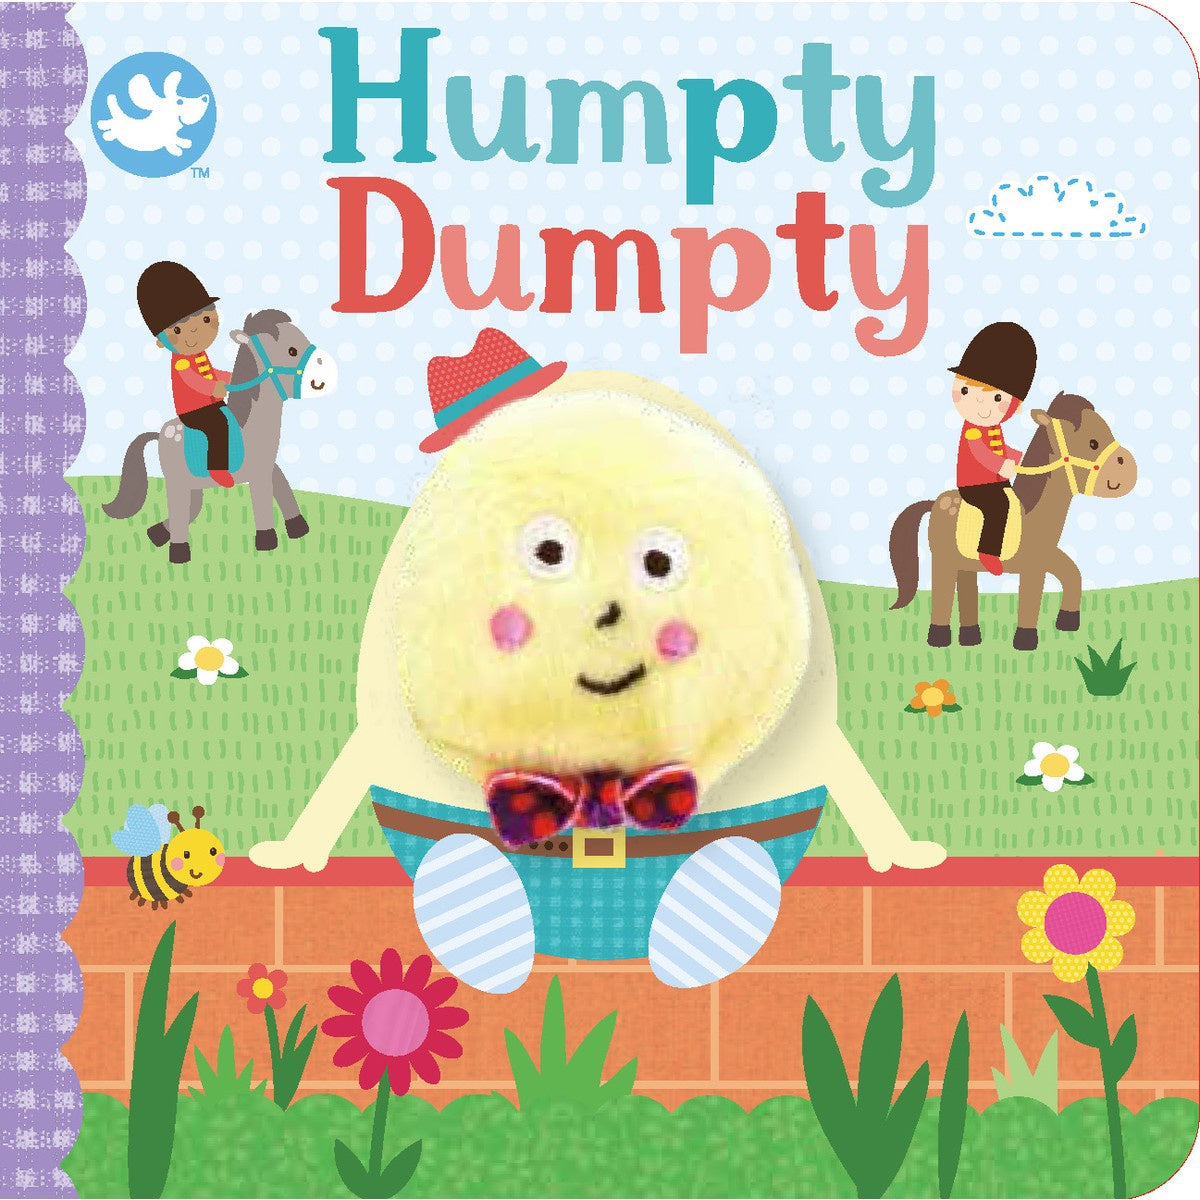 Little Me Finger Puppet Book: Humpty Dumpty